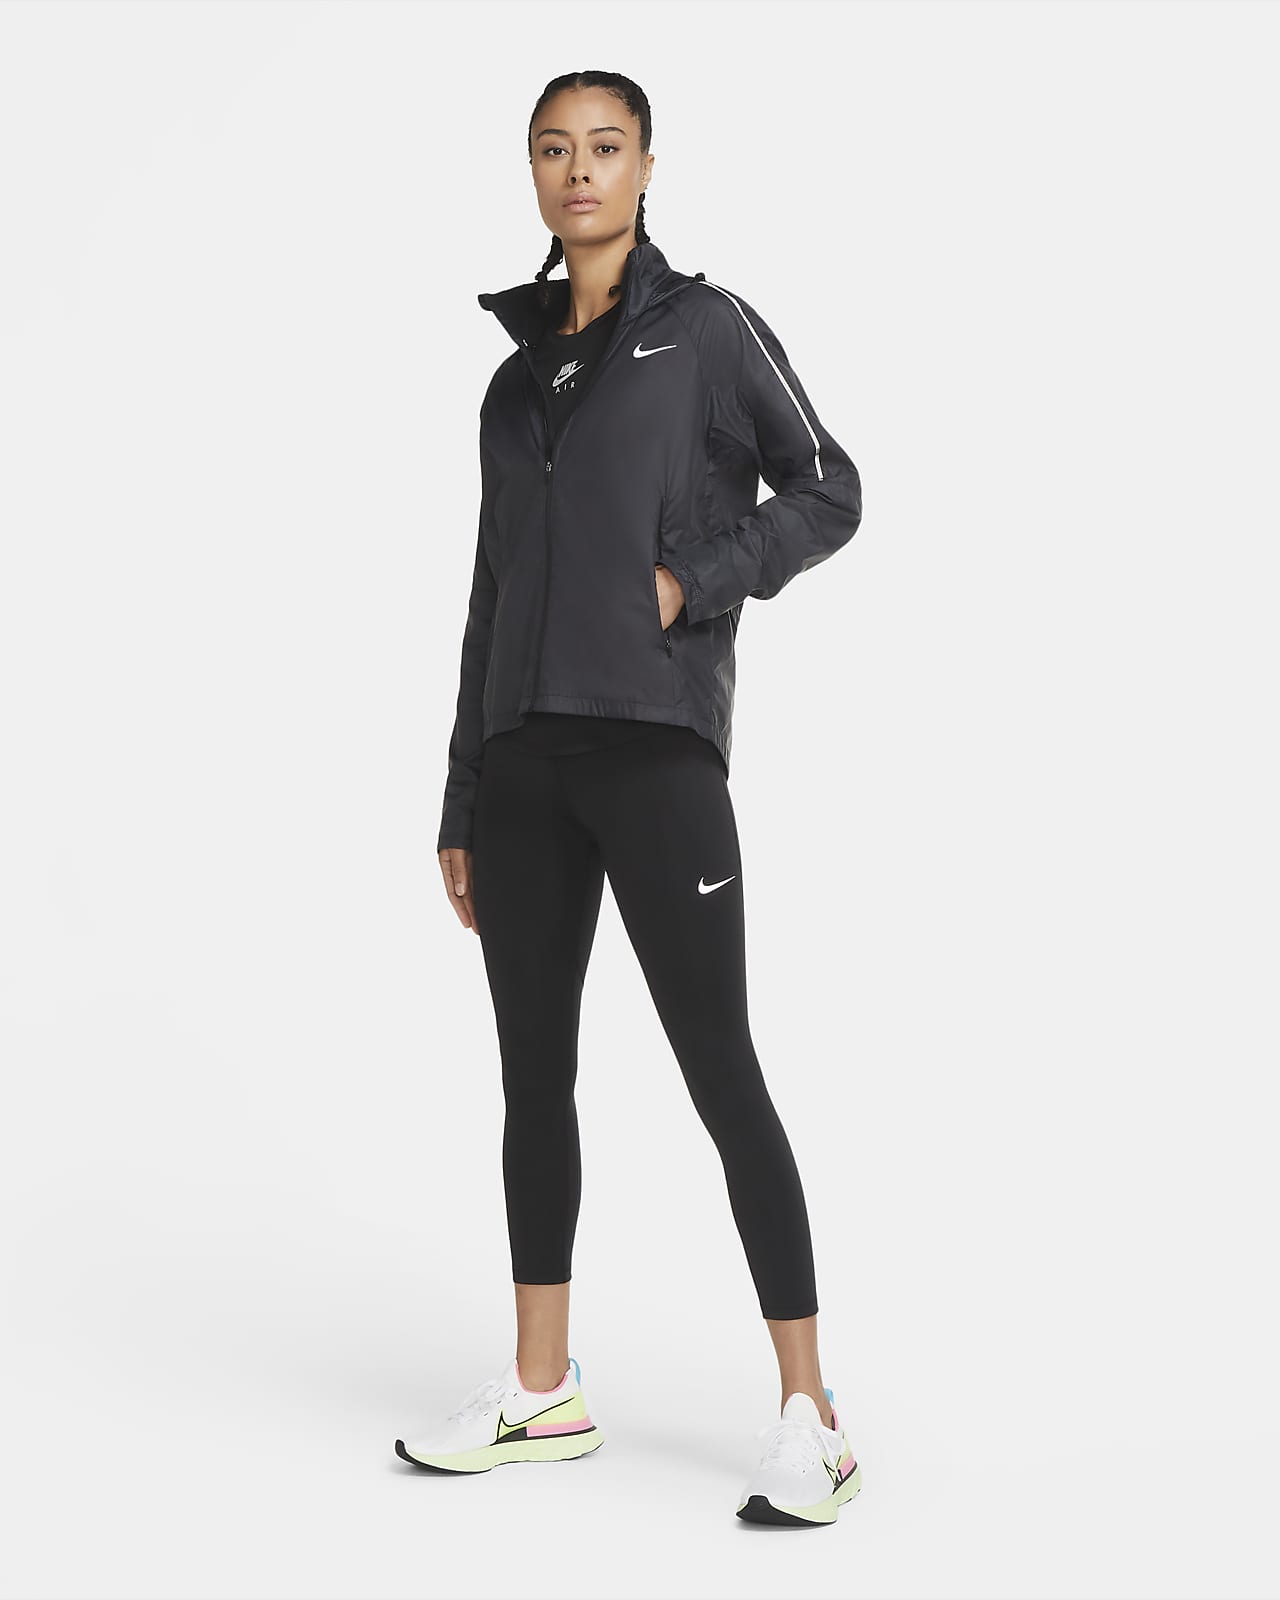 dinastía formal Popular Nike Shield Chaqueta de running - Mujer. Nike ES